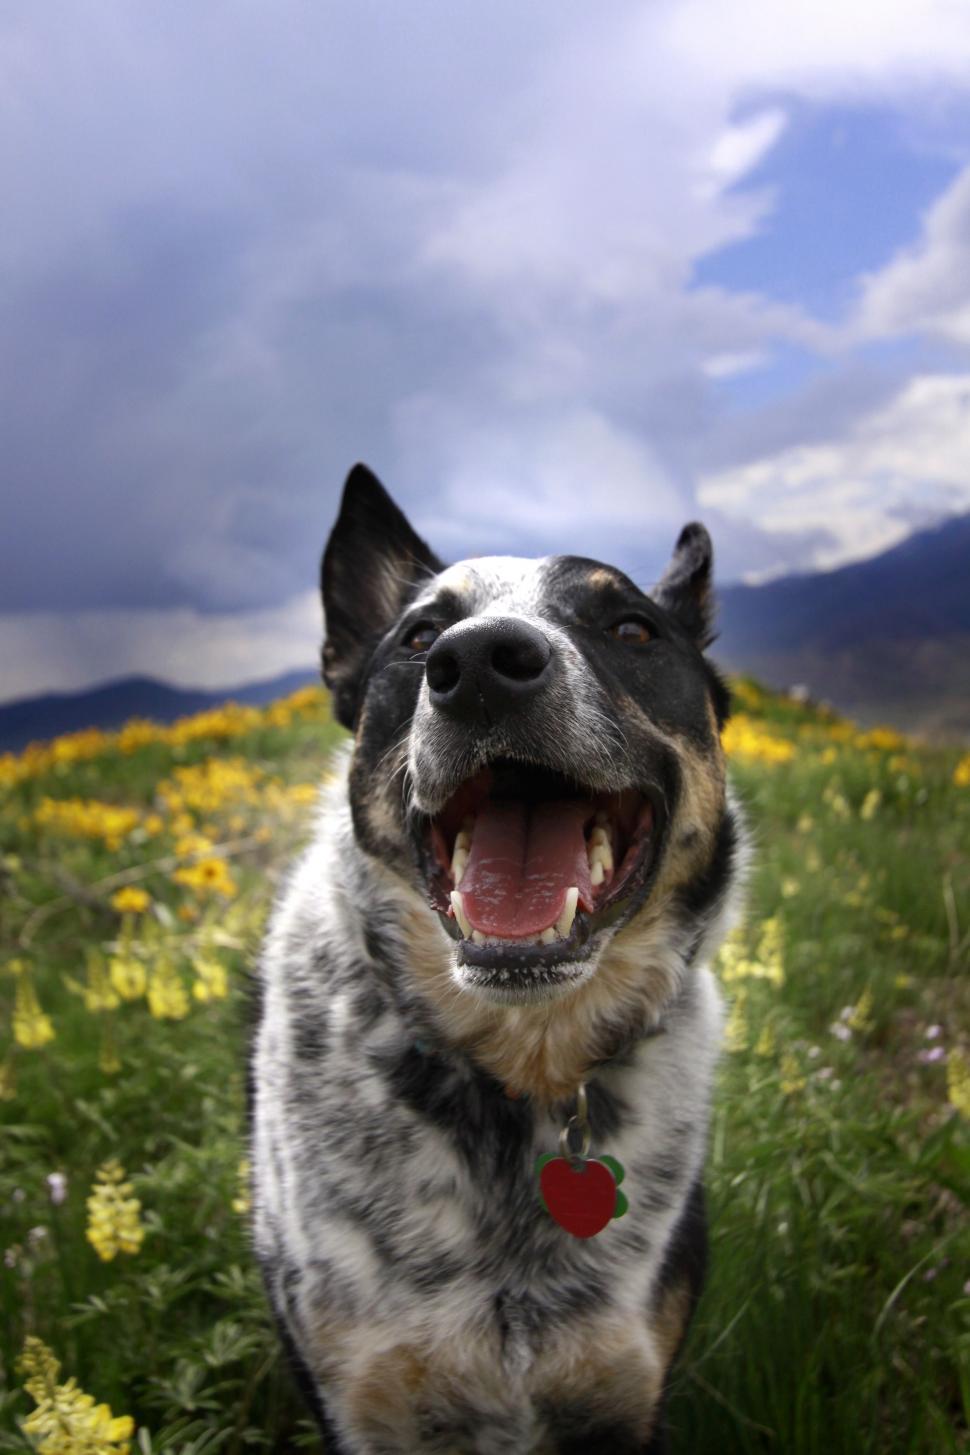 Download Free Stock Photo of Dog in wild flowers garden 